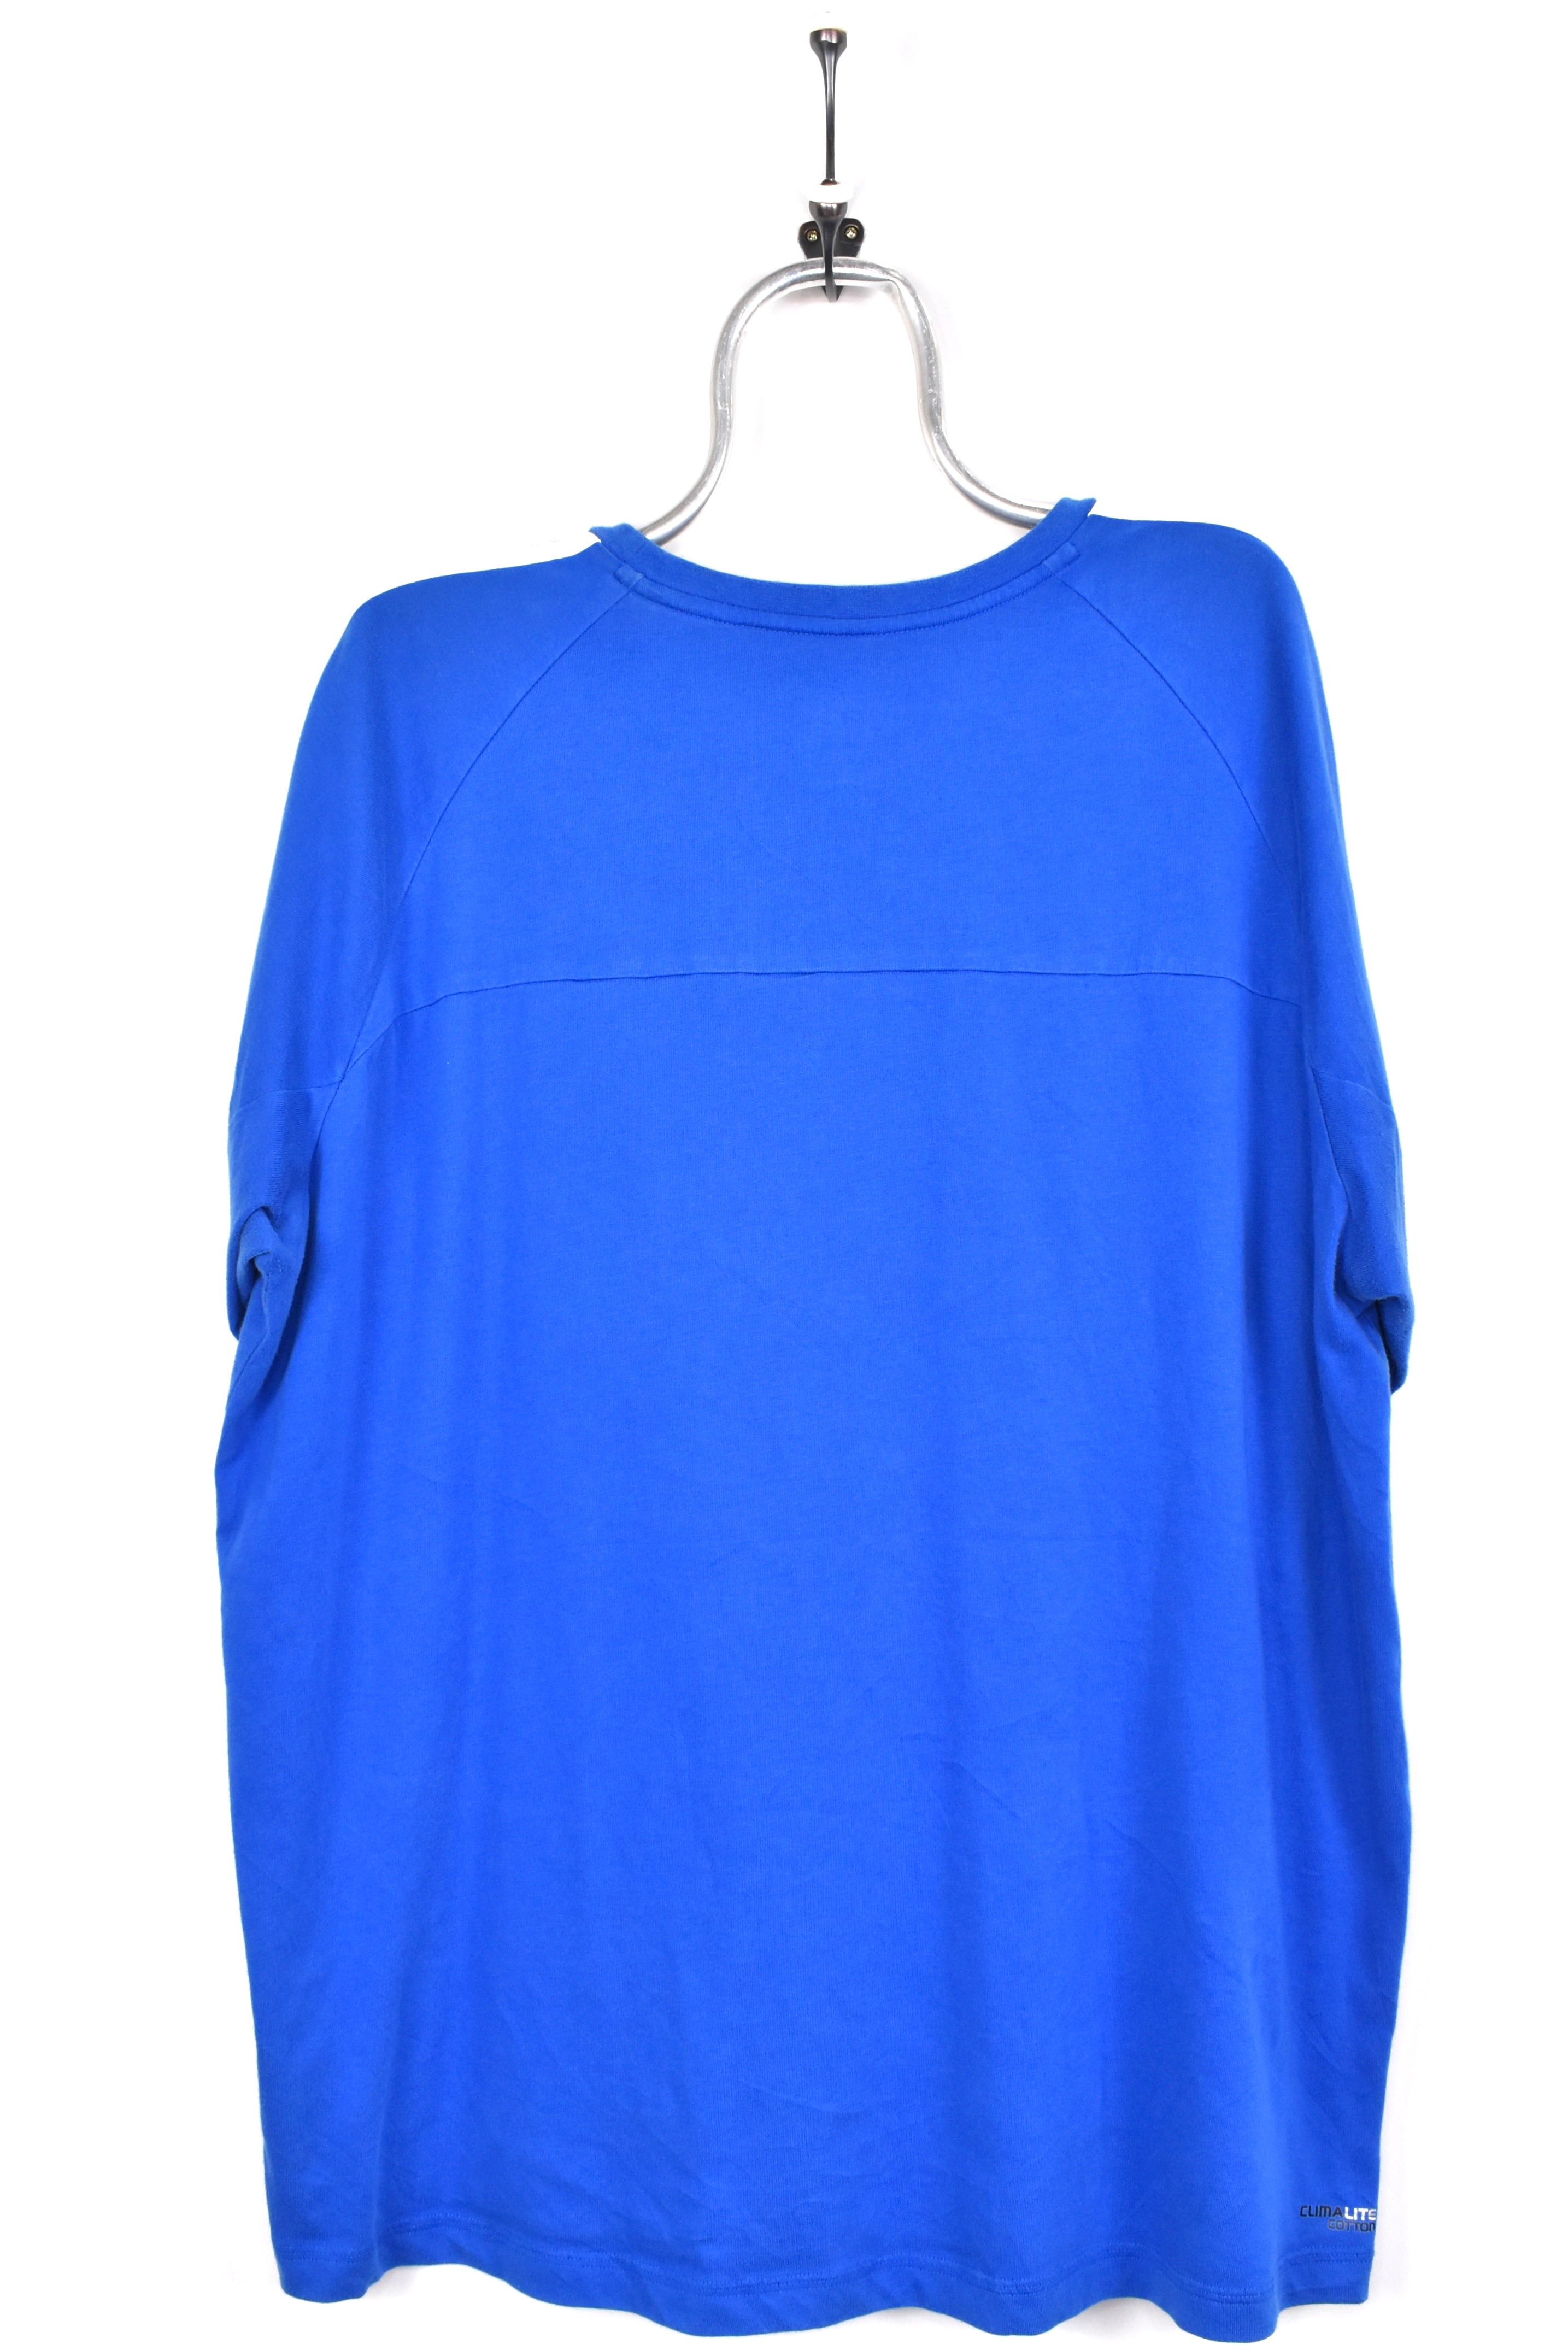 Vintage Adidas shirt, blue embroidered tee - AU XXL ADIDAS